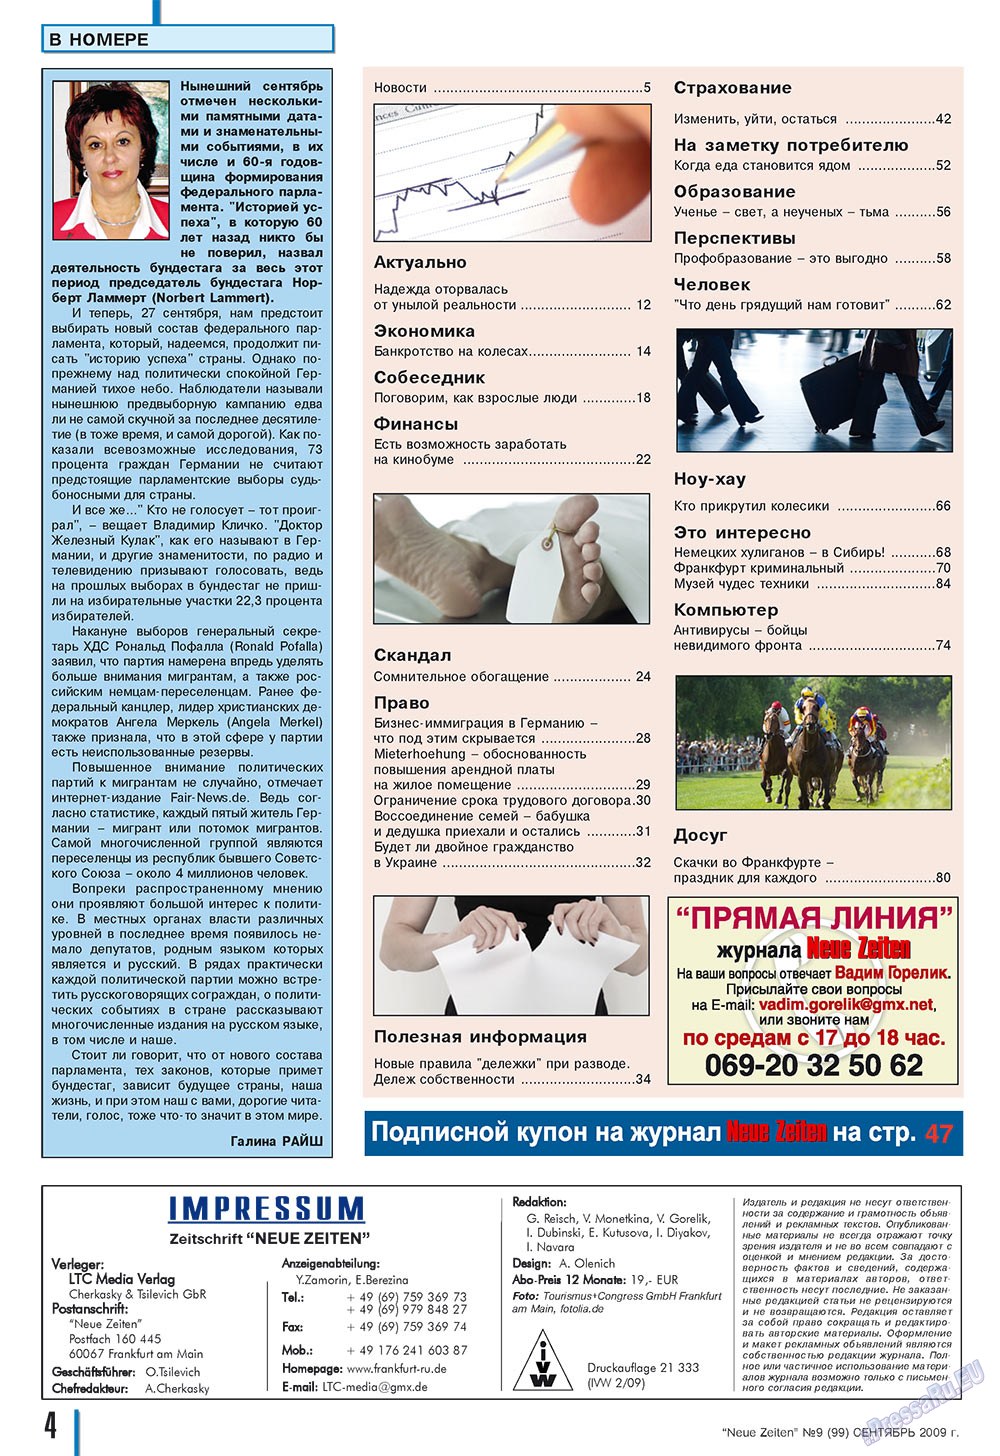 Neue Zeiten (журнал). 2009 год, номер 9, стр. 4